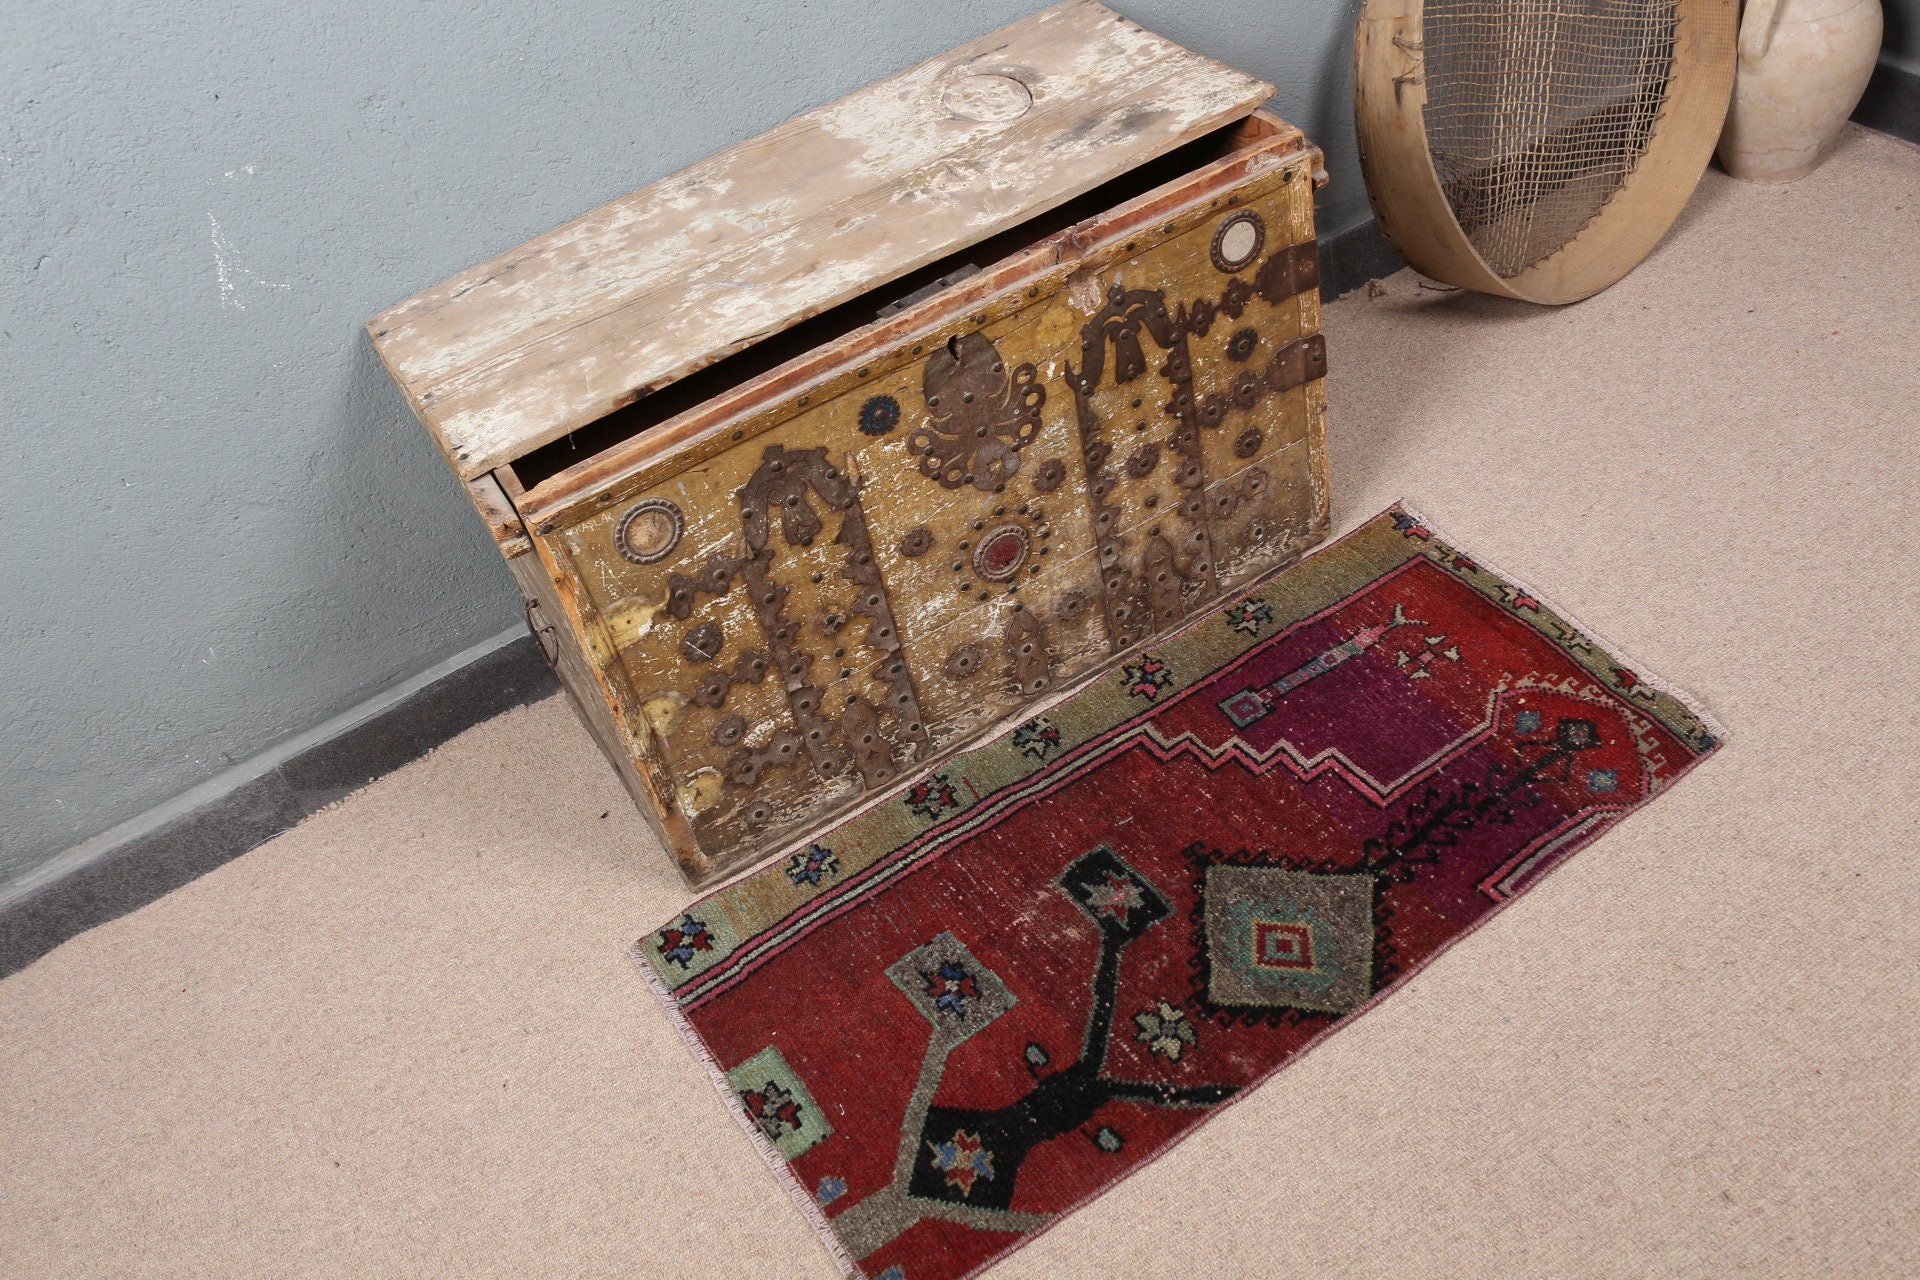 Moroccan Rugs, Turkish Rugs, Home Decor Rug, Bathroom Rug, Vintage Rug, Purple  1.6x3.1 ft Small Rugs, Rugs for Wall Hanging